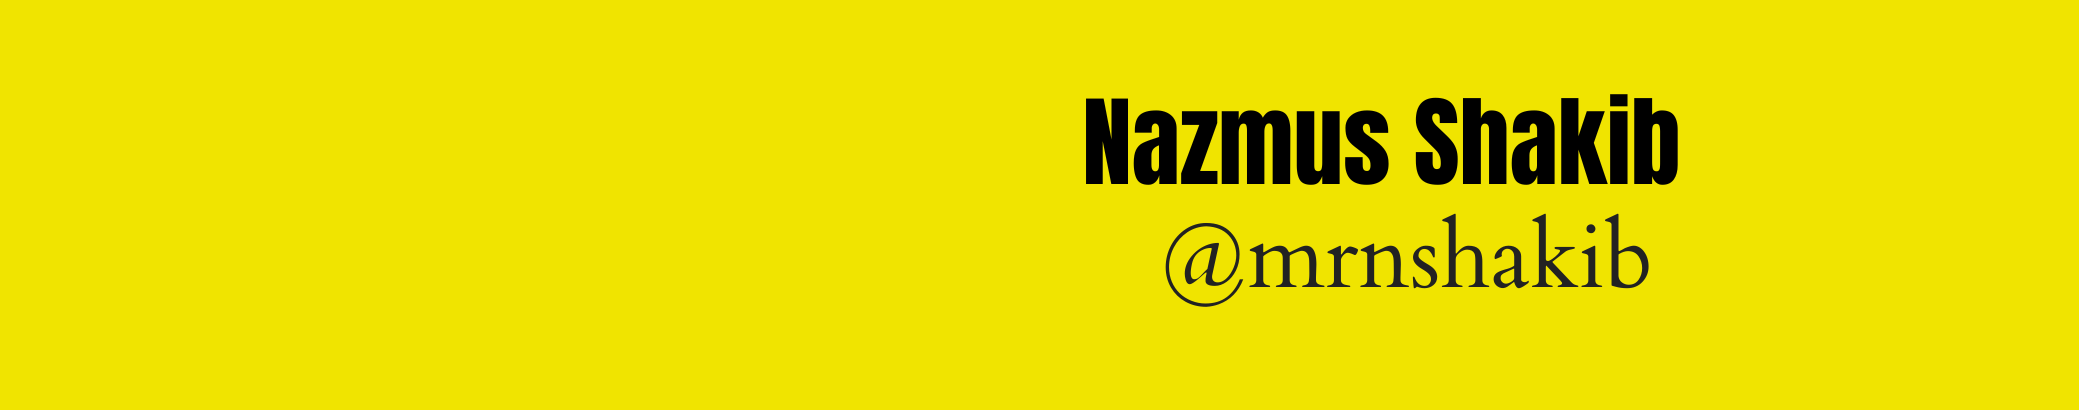 Nazmus Shakib's profile banner